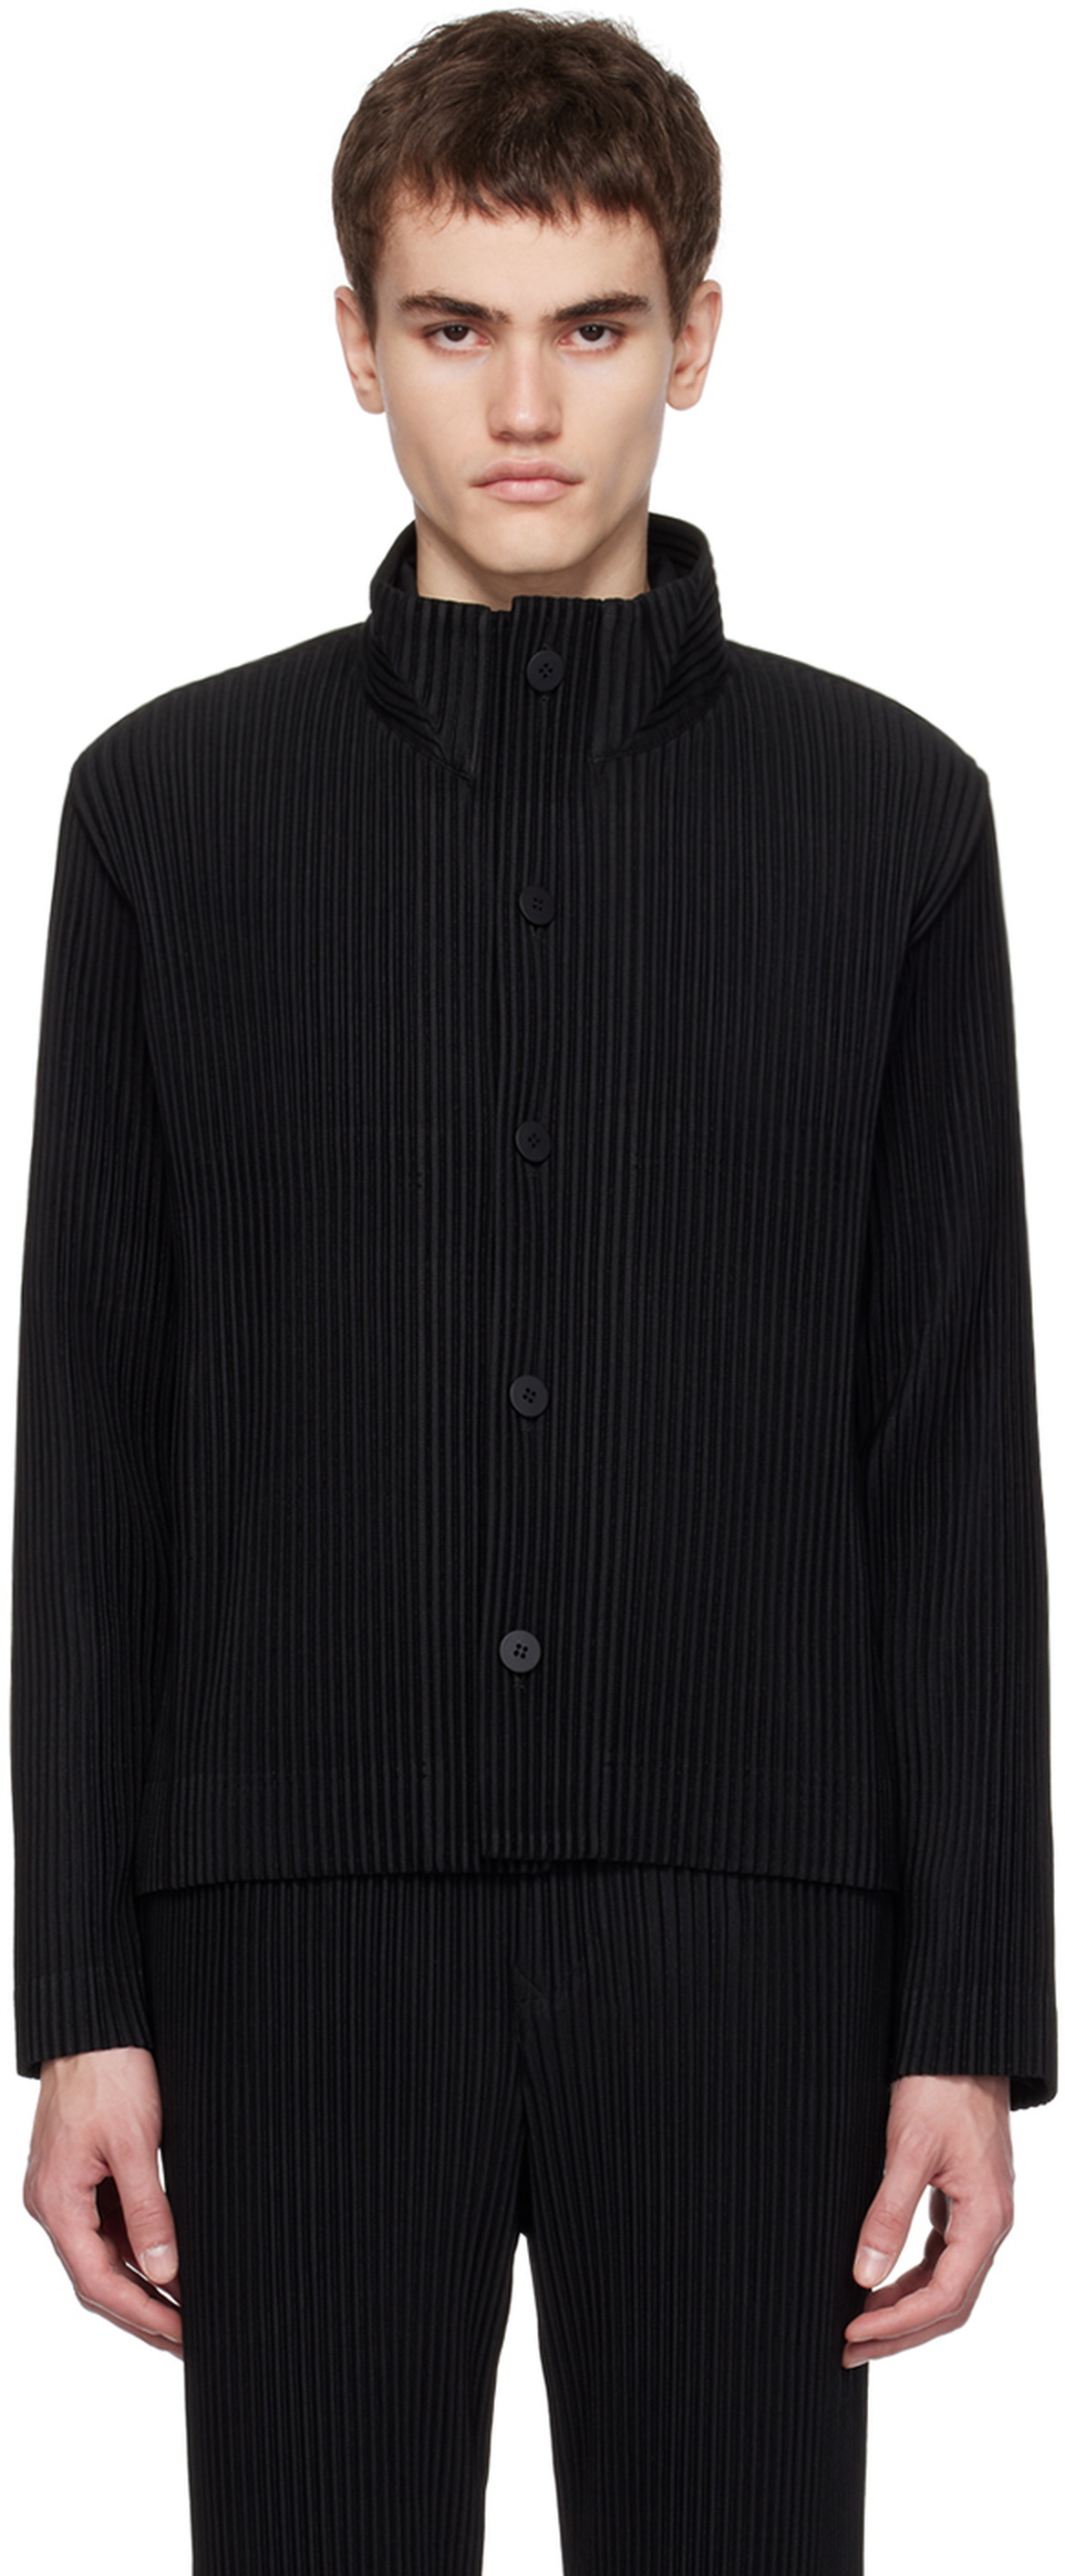 HOMME PLISSÉ ISSEY MIYAKE Black Tailored Pleats 1 Jacket Homme Plisse ...